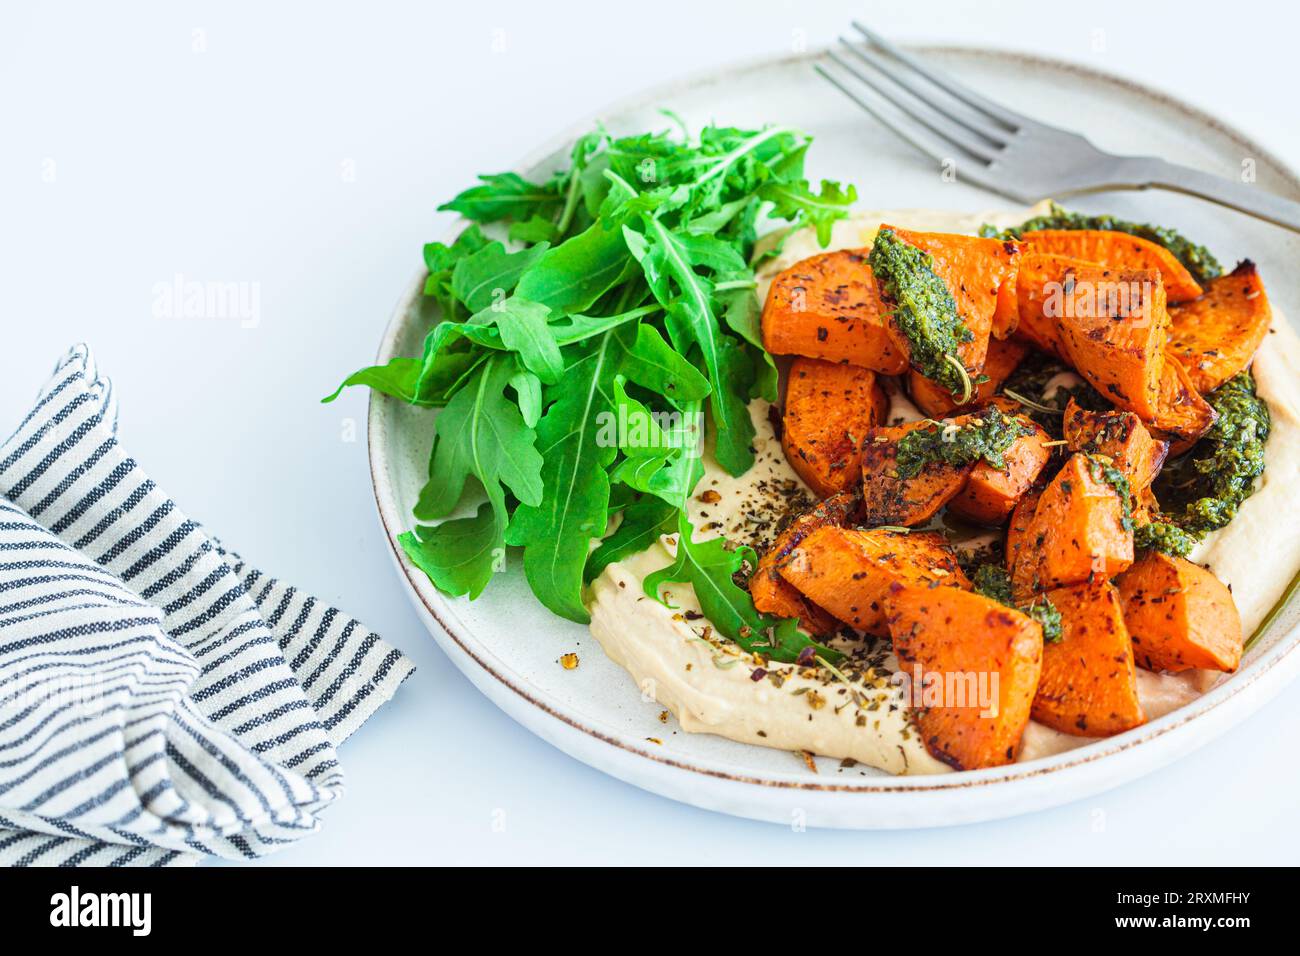 Vegan lunch - hummus, baked sweet potato and pesto, white background, close-up. Stock Photo